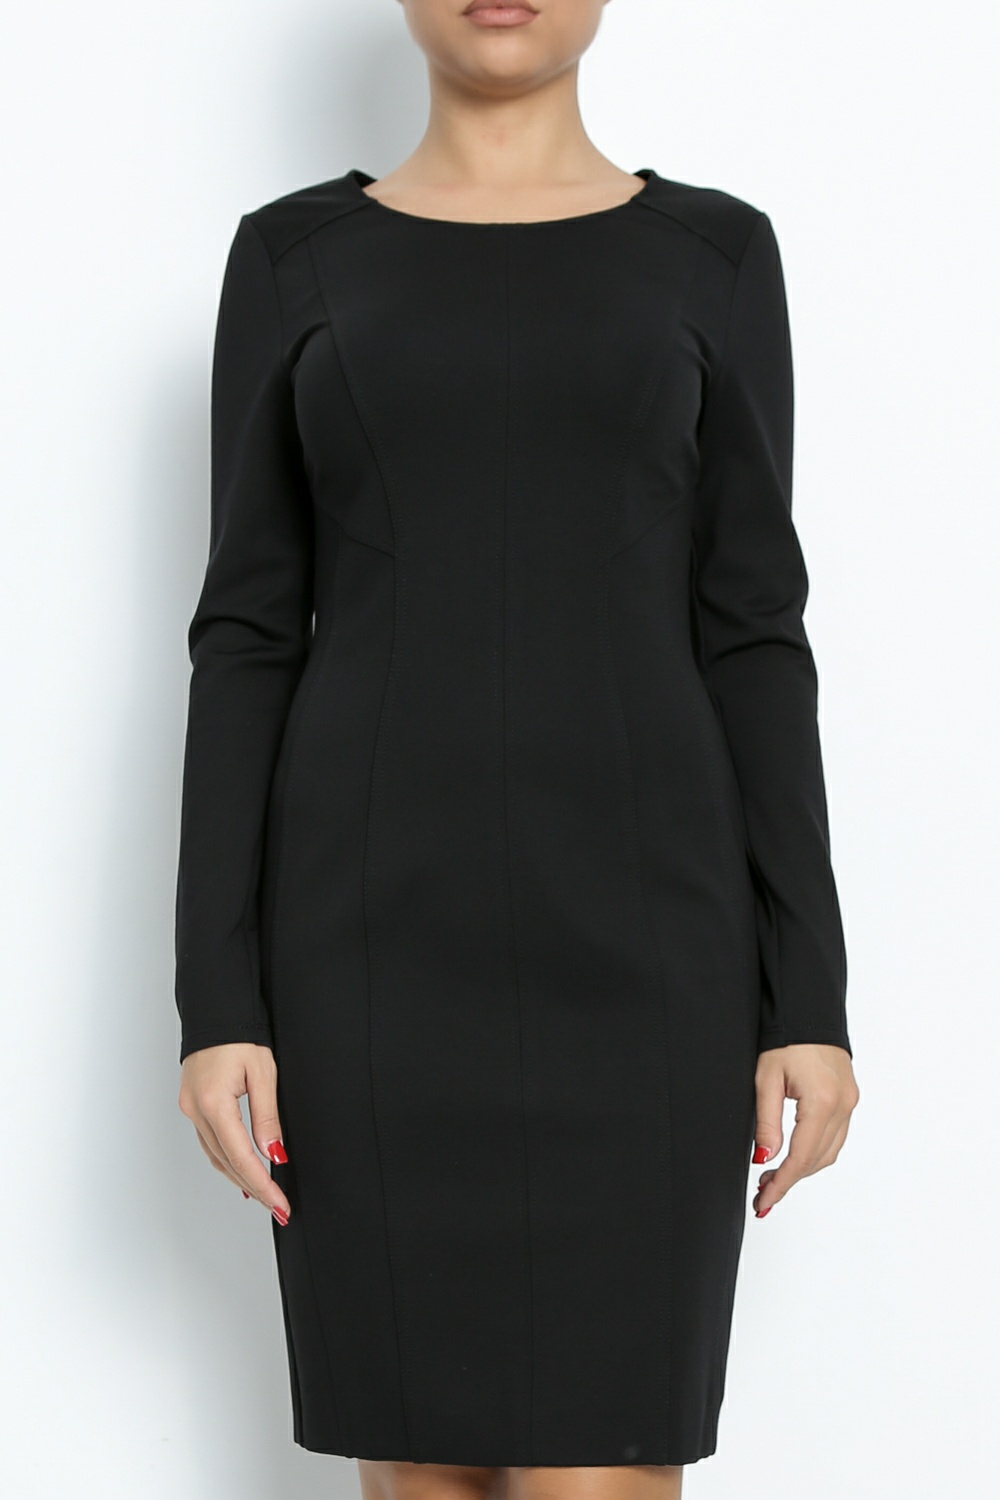 BOSS – Γυναικειο φορεμα BOSS Aloka1 μαυρο